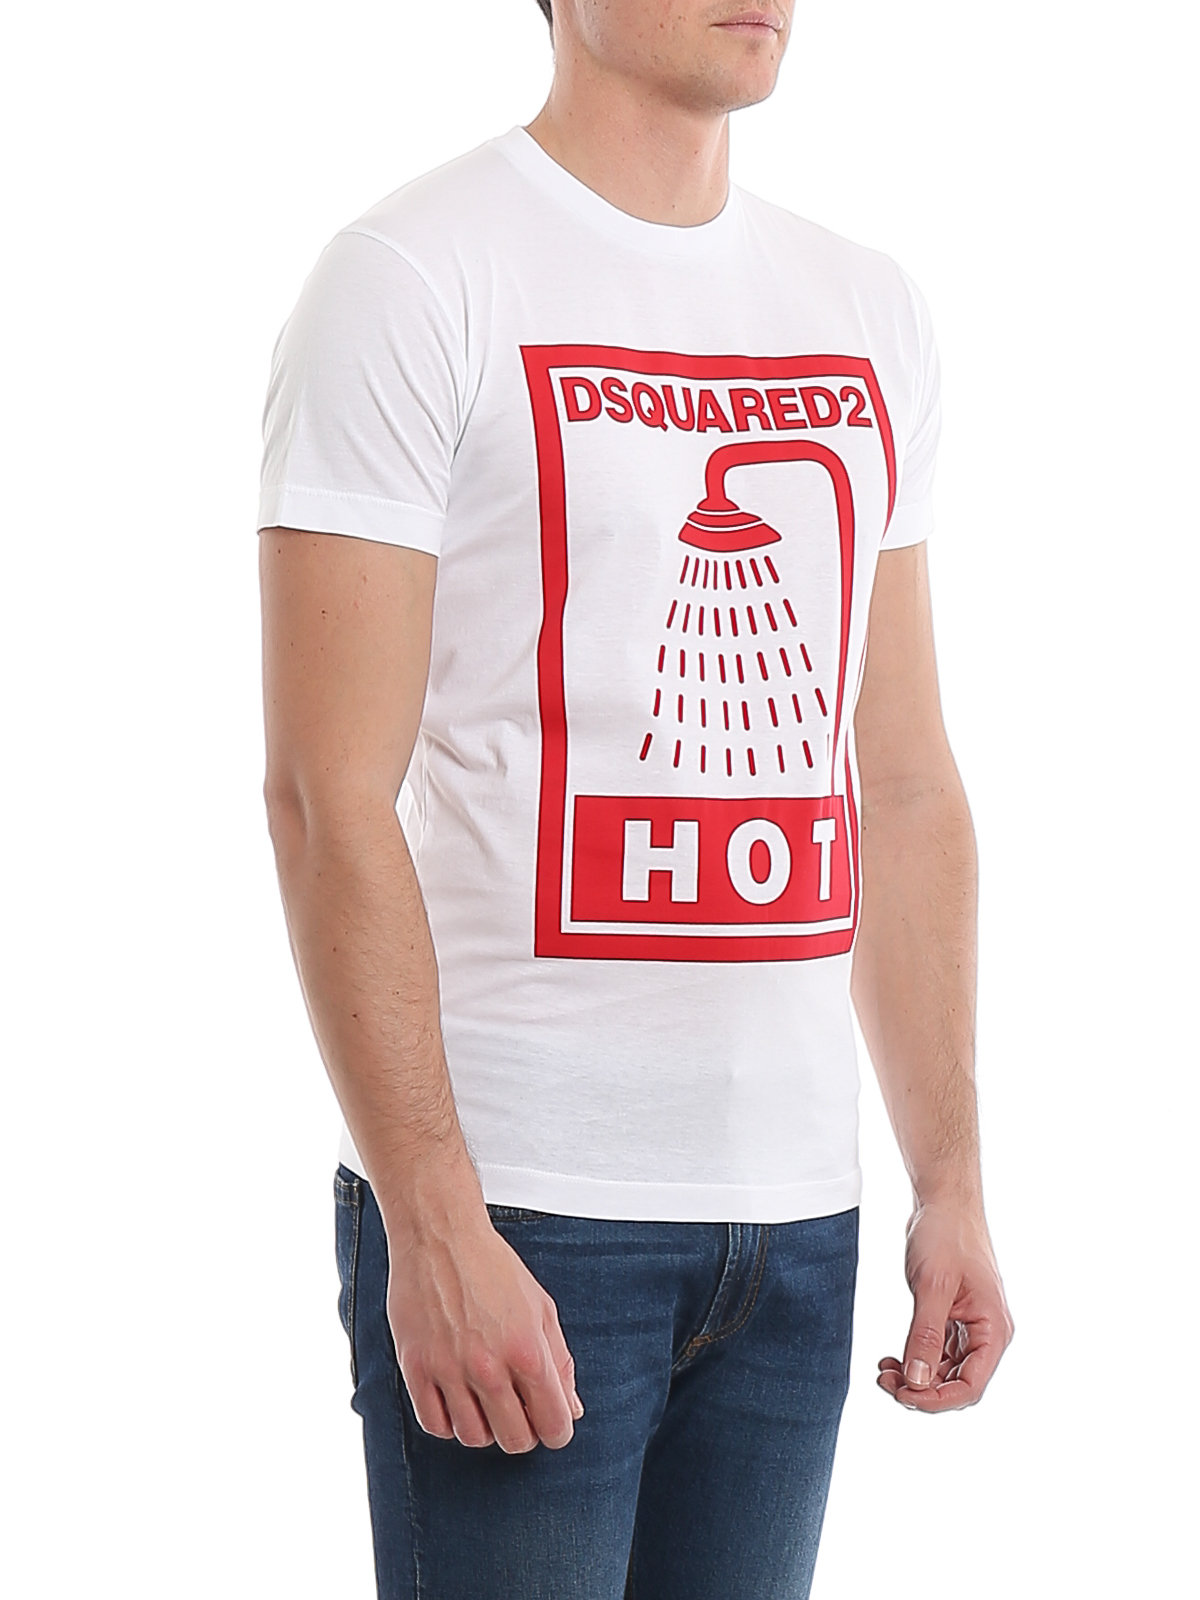 Tシャツ Dsquared2 - Tシャツ - 白 - S74GD0651S22427100 | iKRIX.com